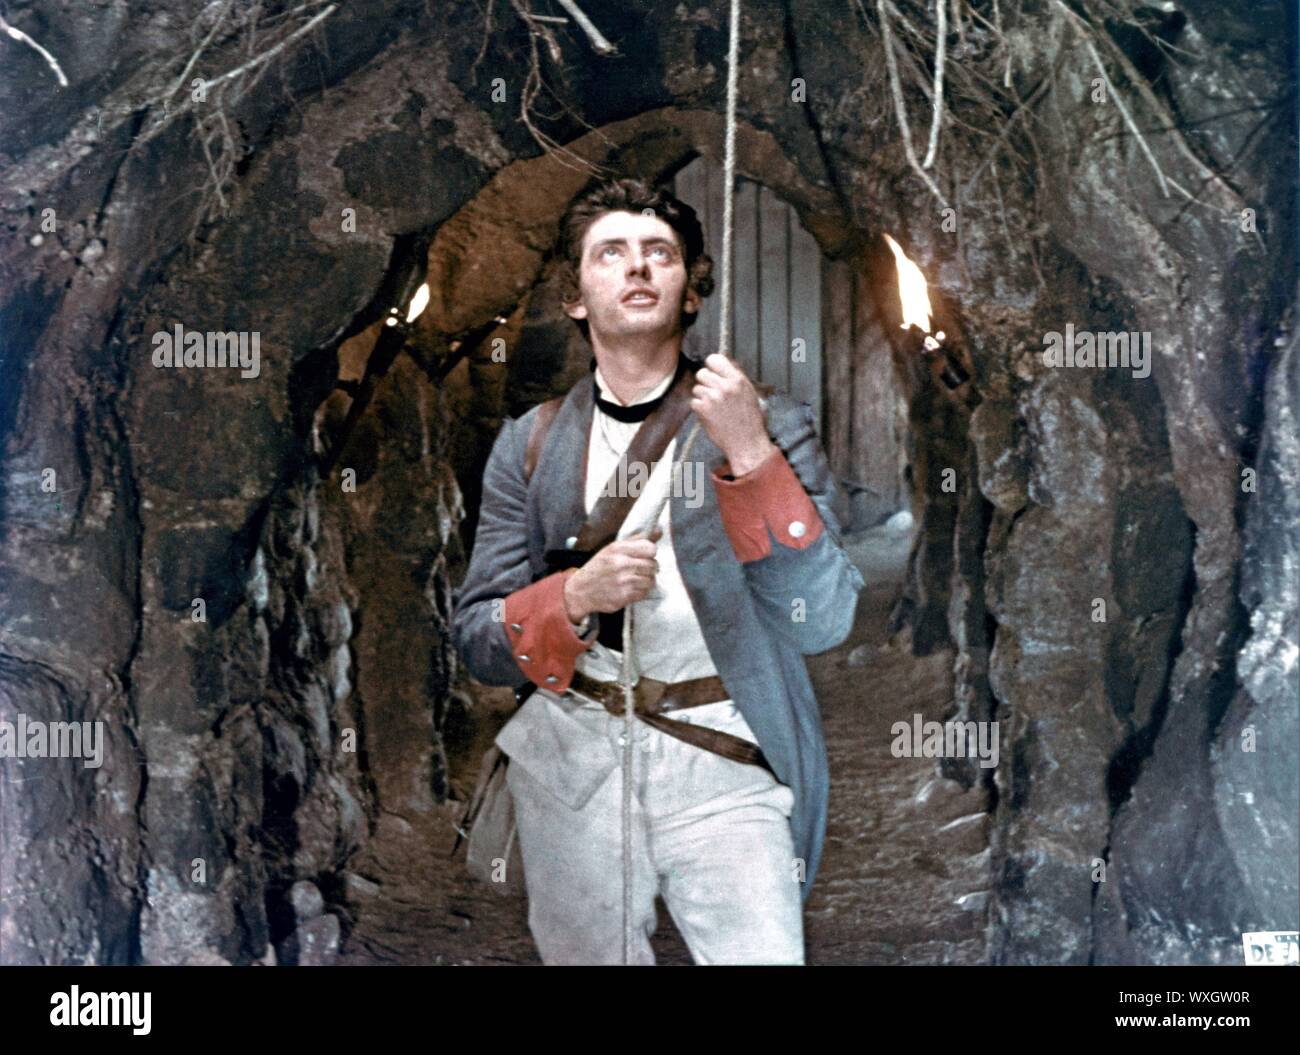 Rolf Ludwig as Der Soldat / The Soldier in DAS FEUERZEUG / THE TINDERBOX  1959 on BBC TV